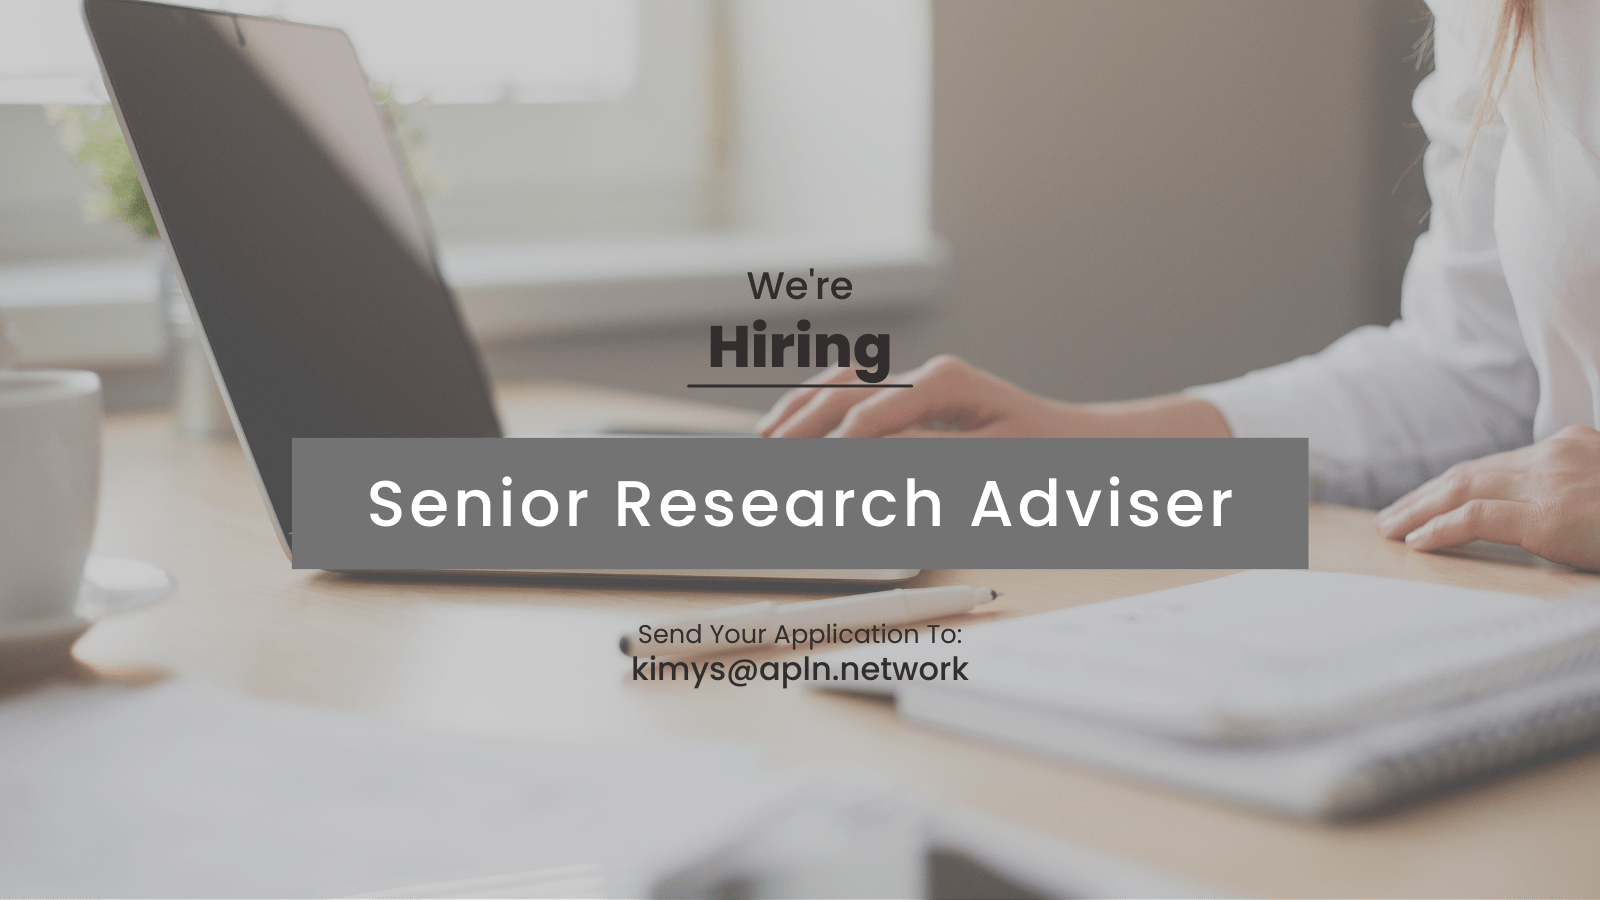 [CLOSED] Senior Research Adviser - Job Advert